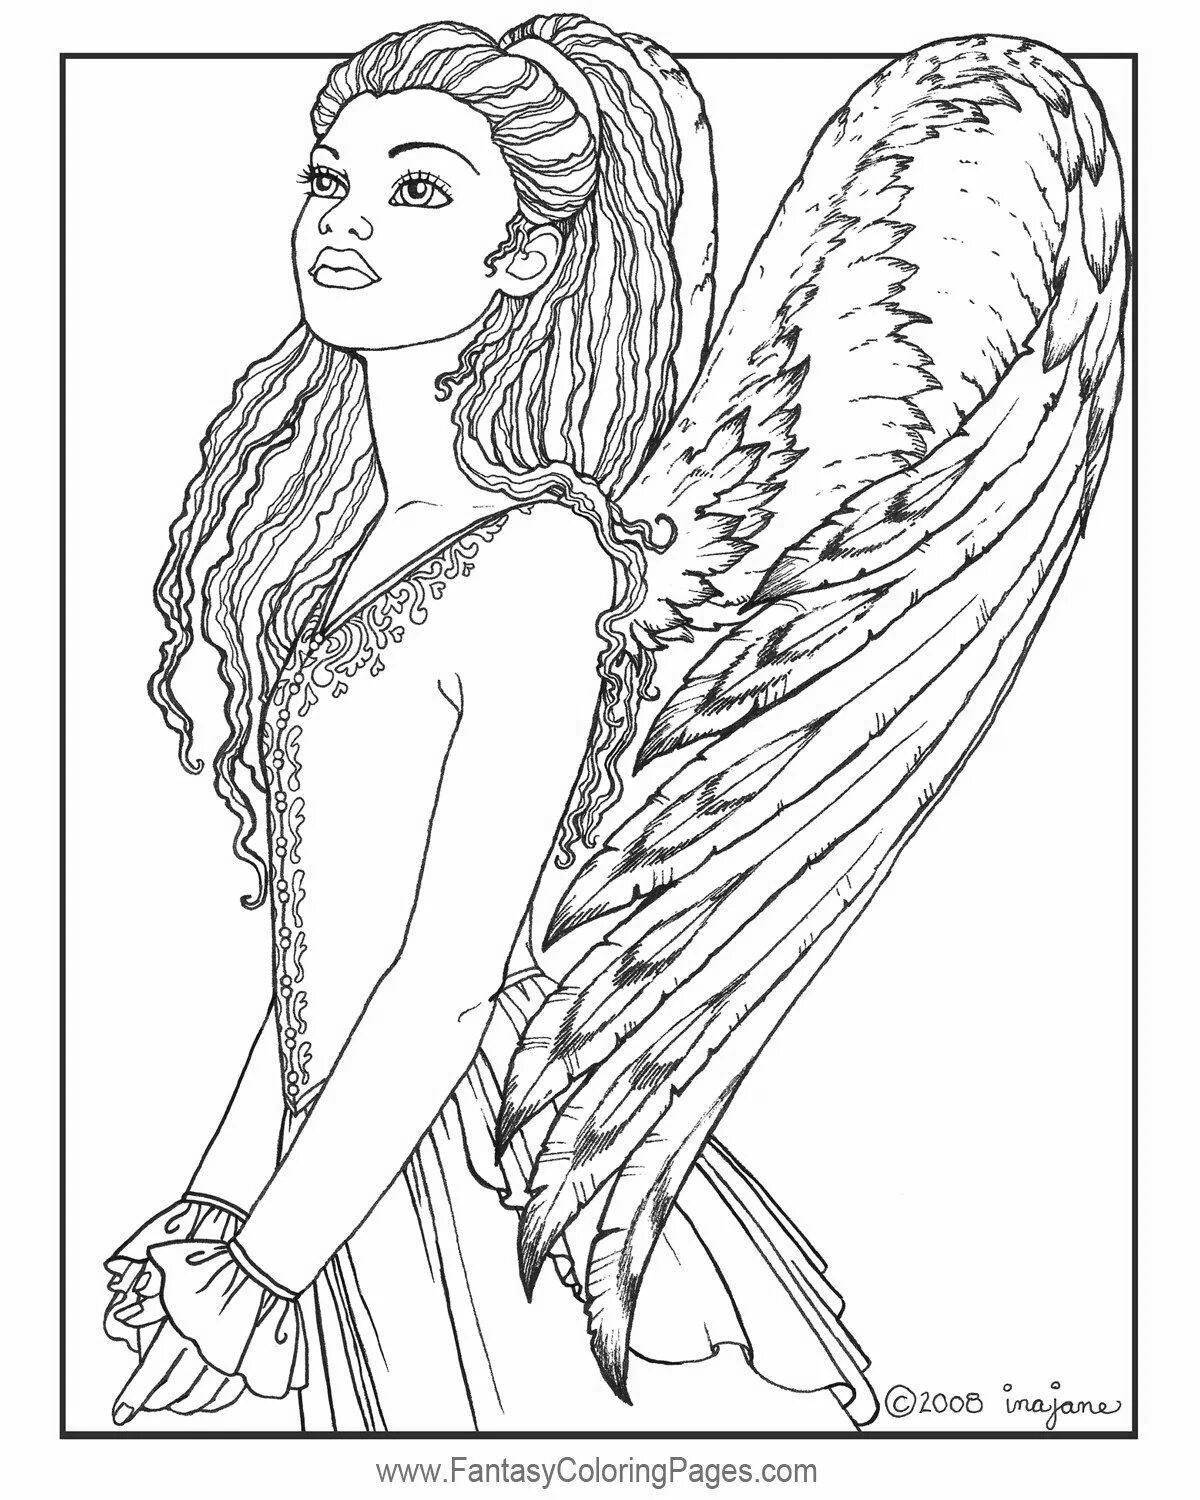 Coloring angelic-auraed angel girl